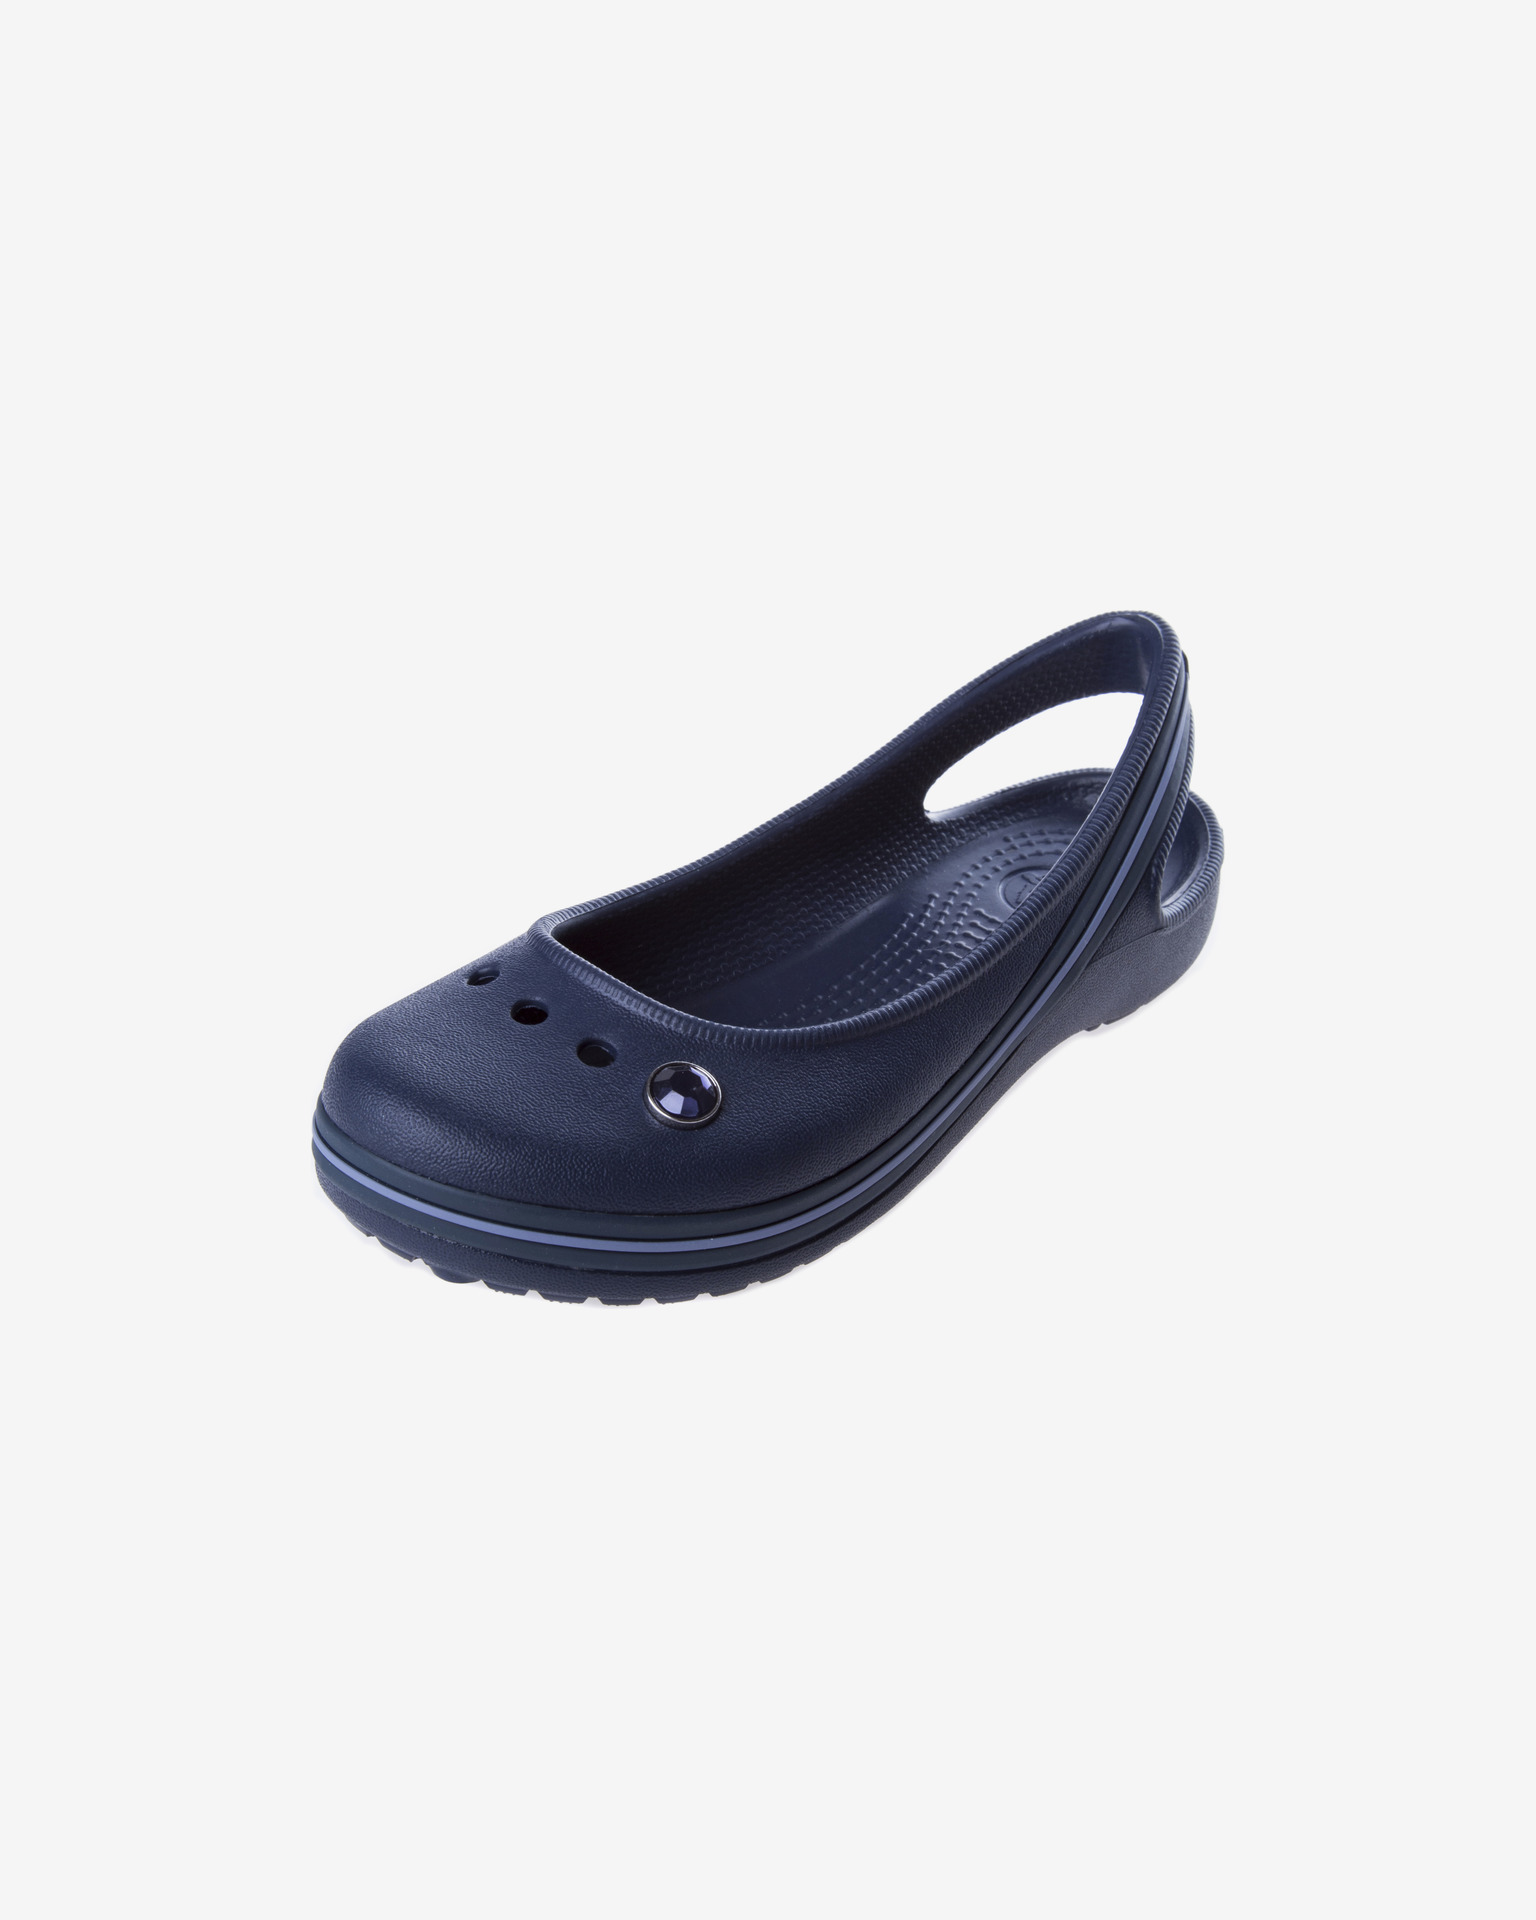 Crocs Genna II Gemstone TODDLER Flats Slingback Water Shoes Navy size 9,10,11,12